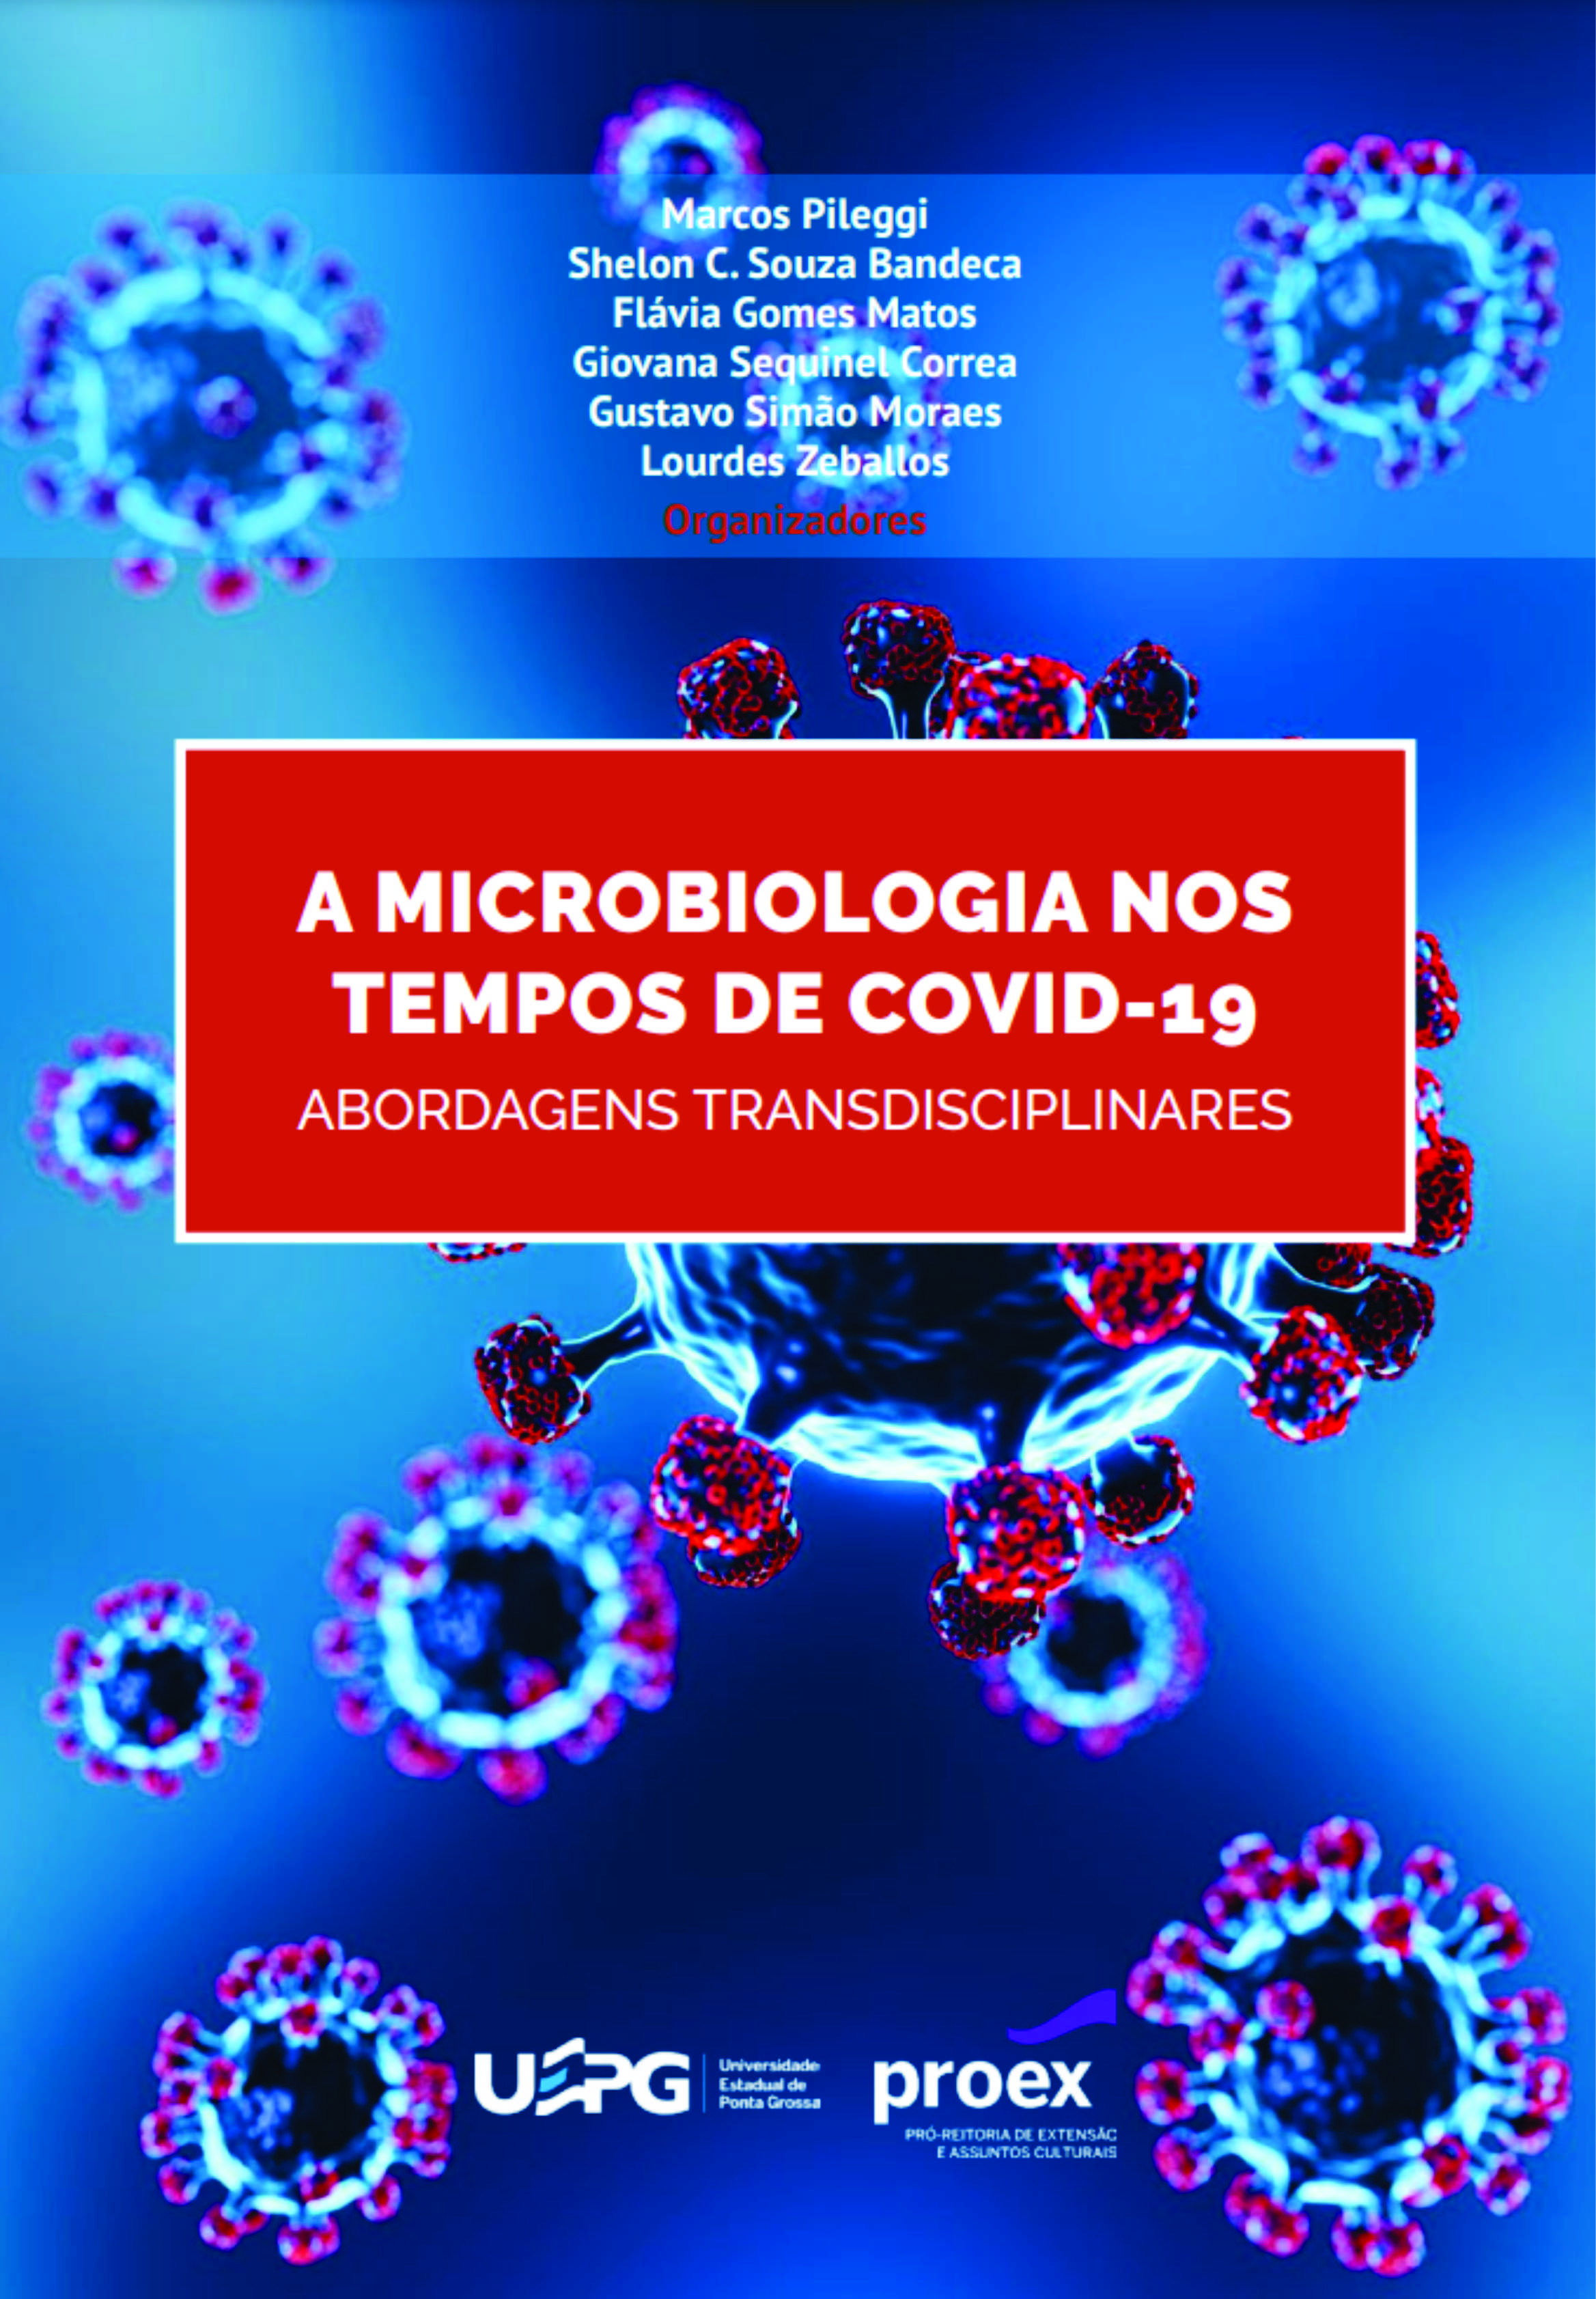 A Microbiologia nos tempos de Covid-19